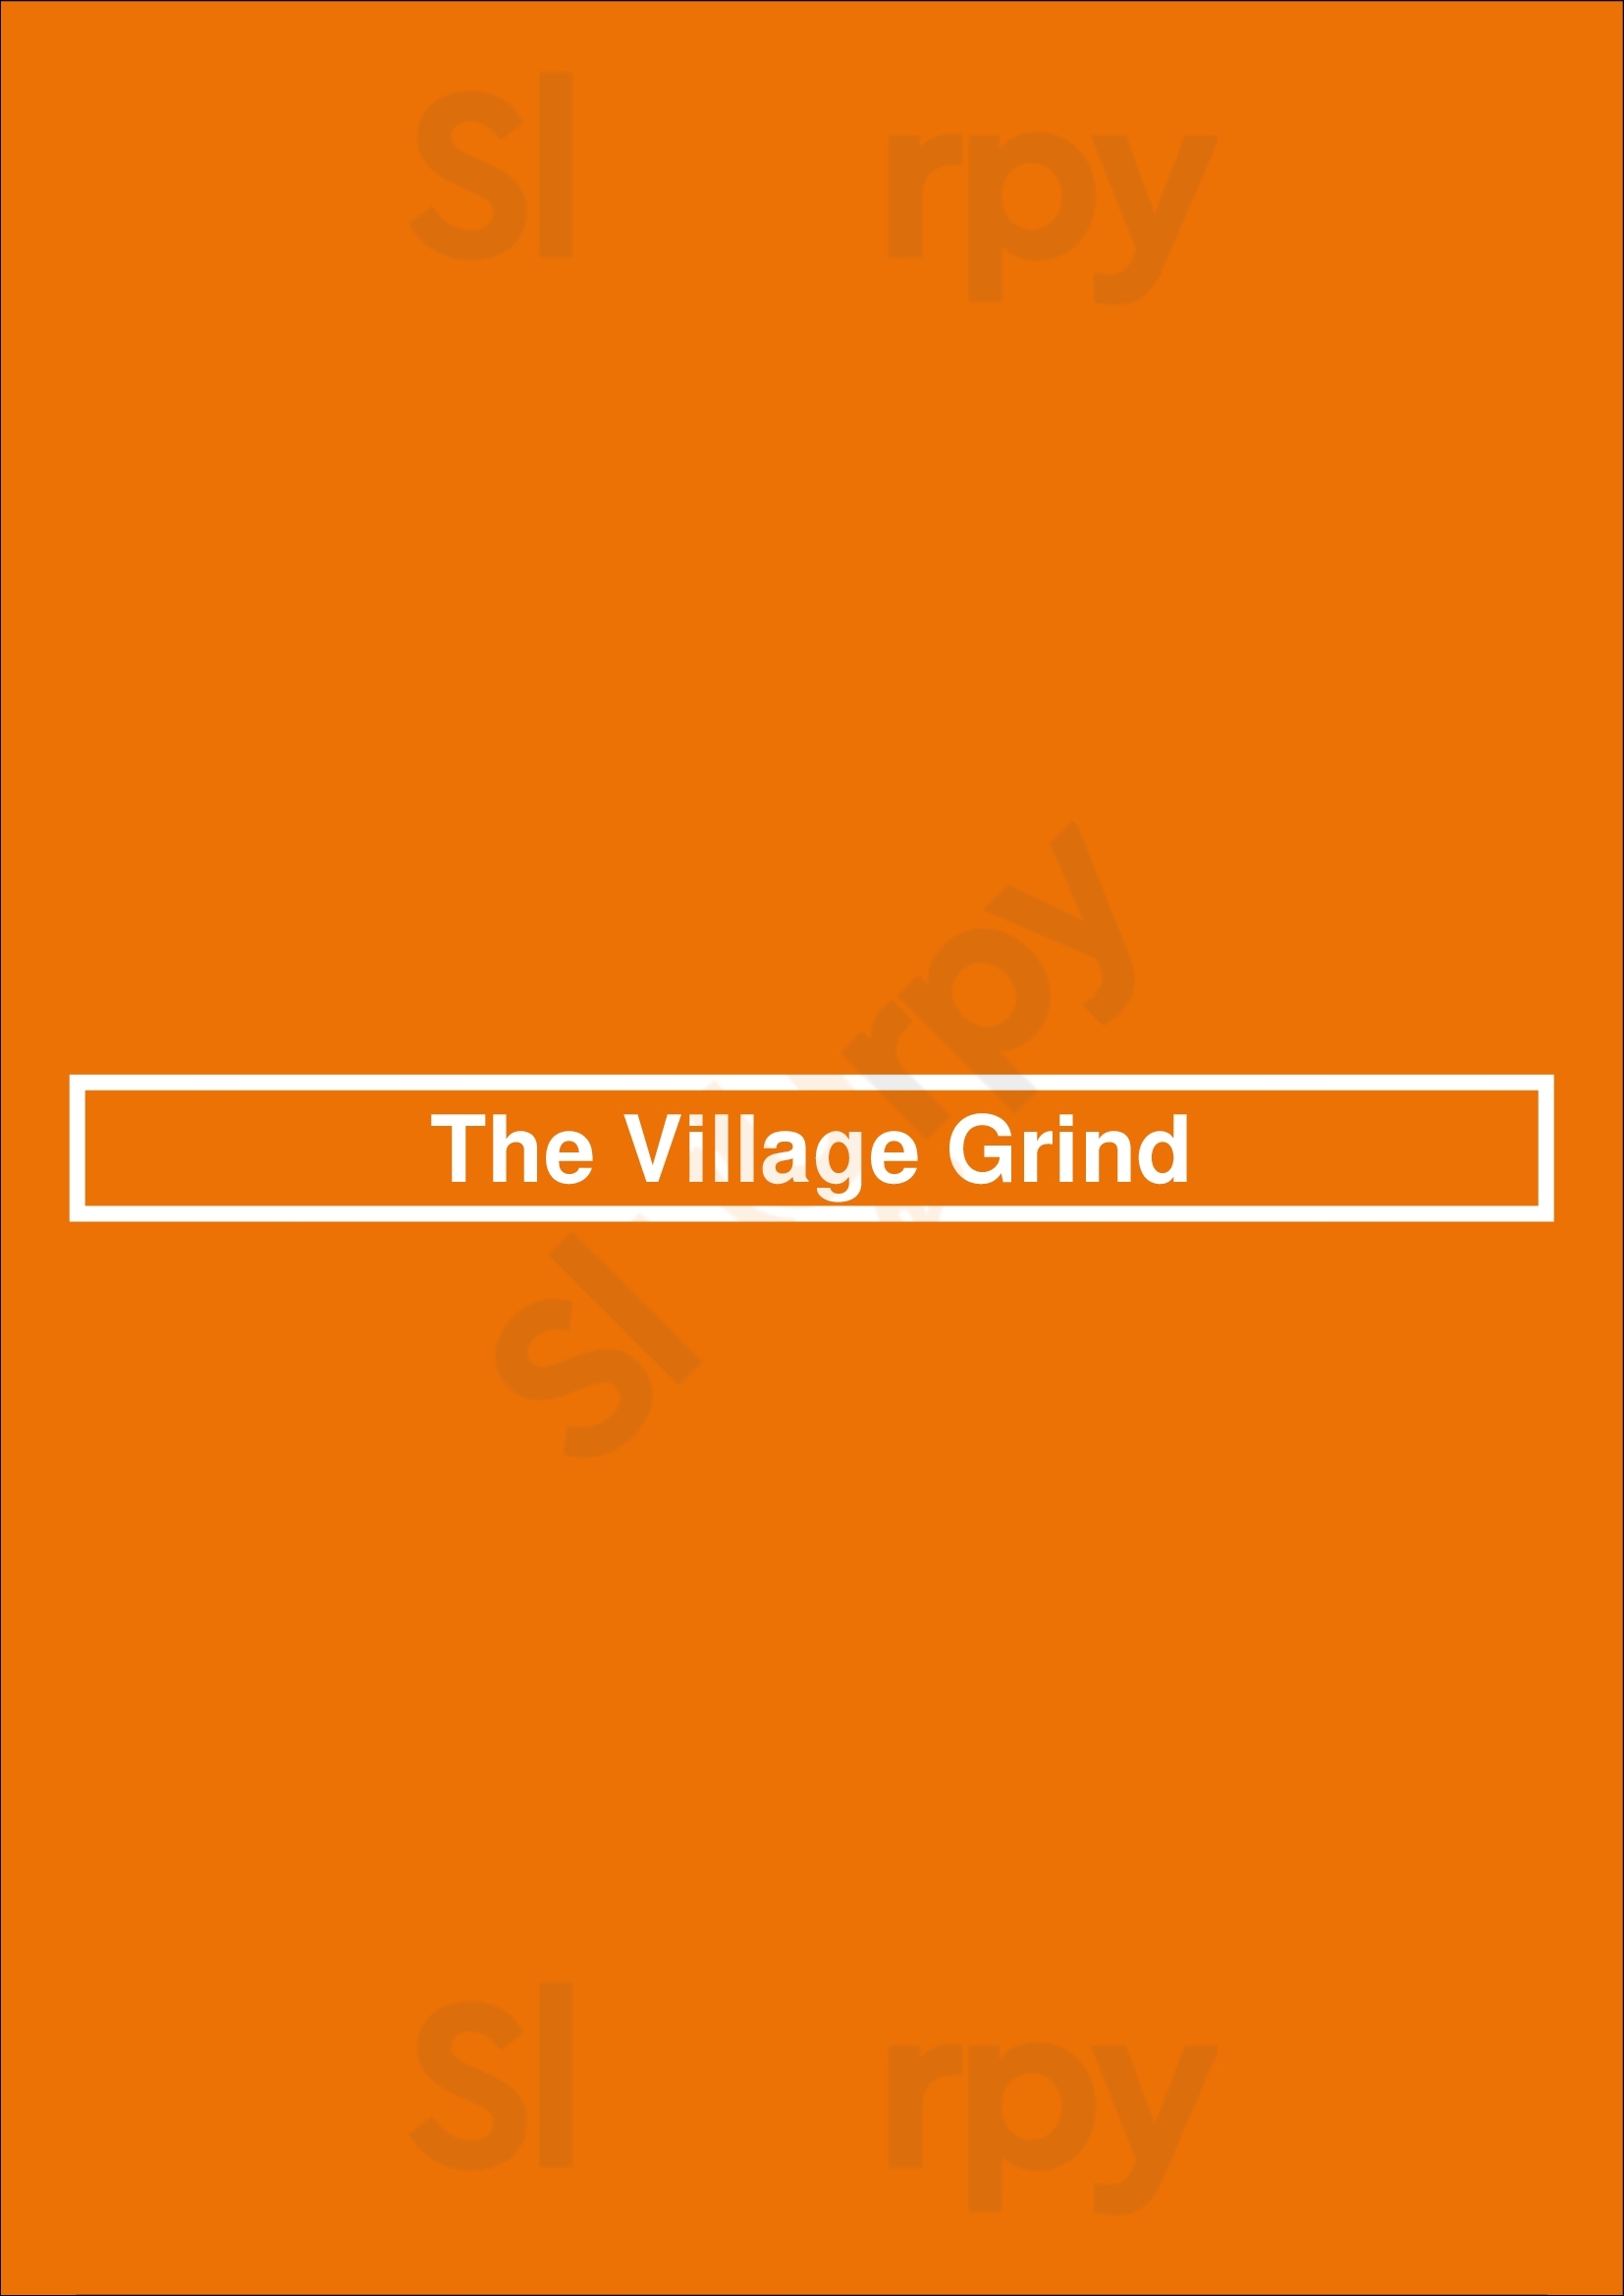 The Village Grind Long Beach Menu - 1